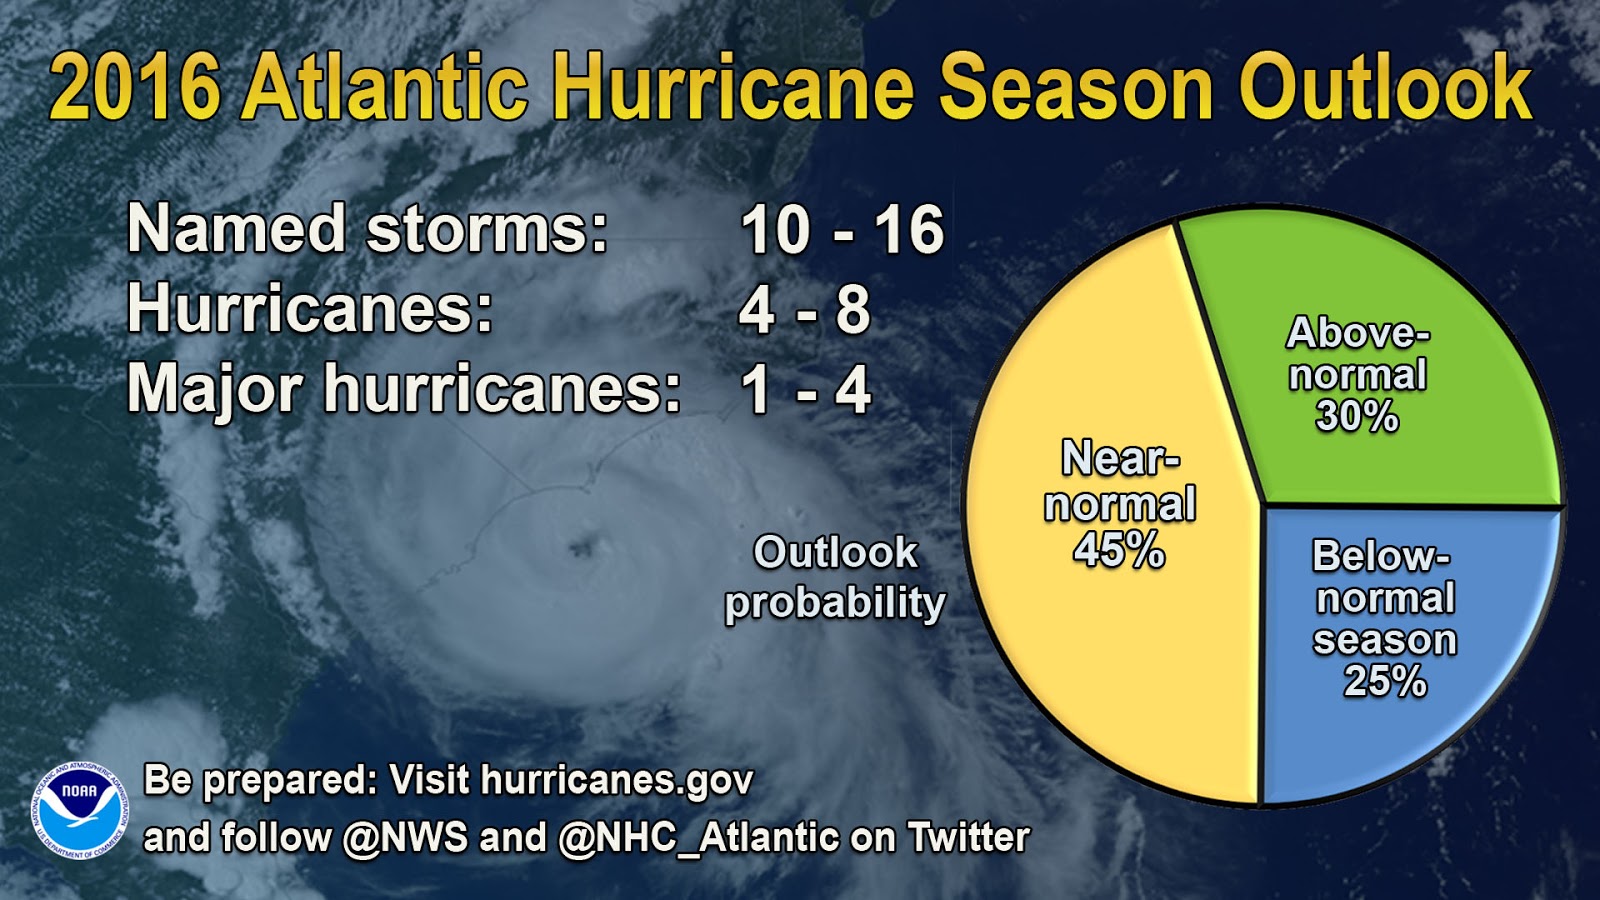 West 12th Road Block Association News: NOAA's 2016 Atlantic Hurricane Season Outlook